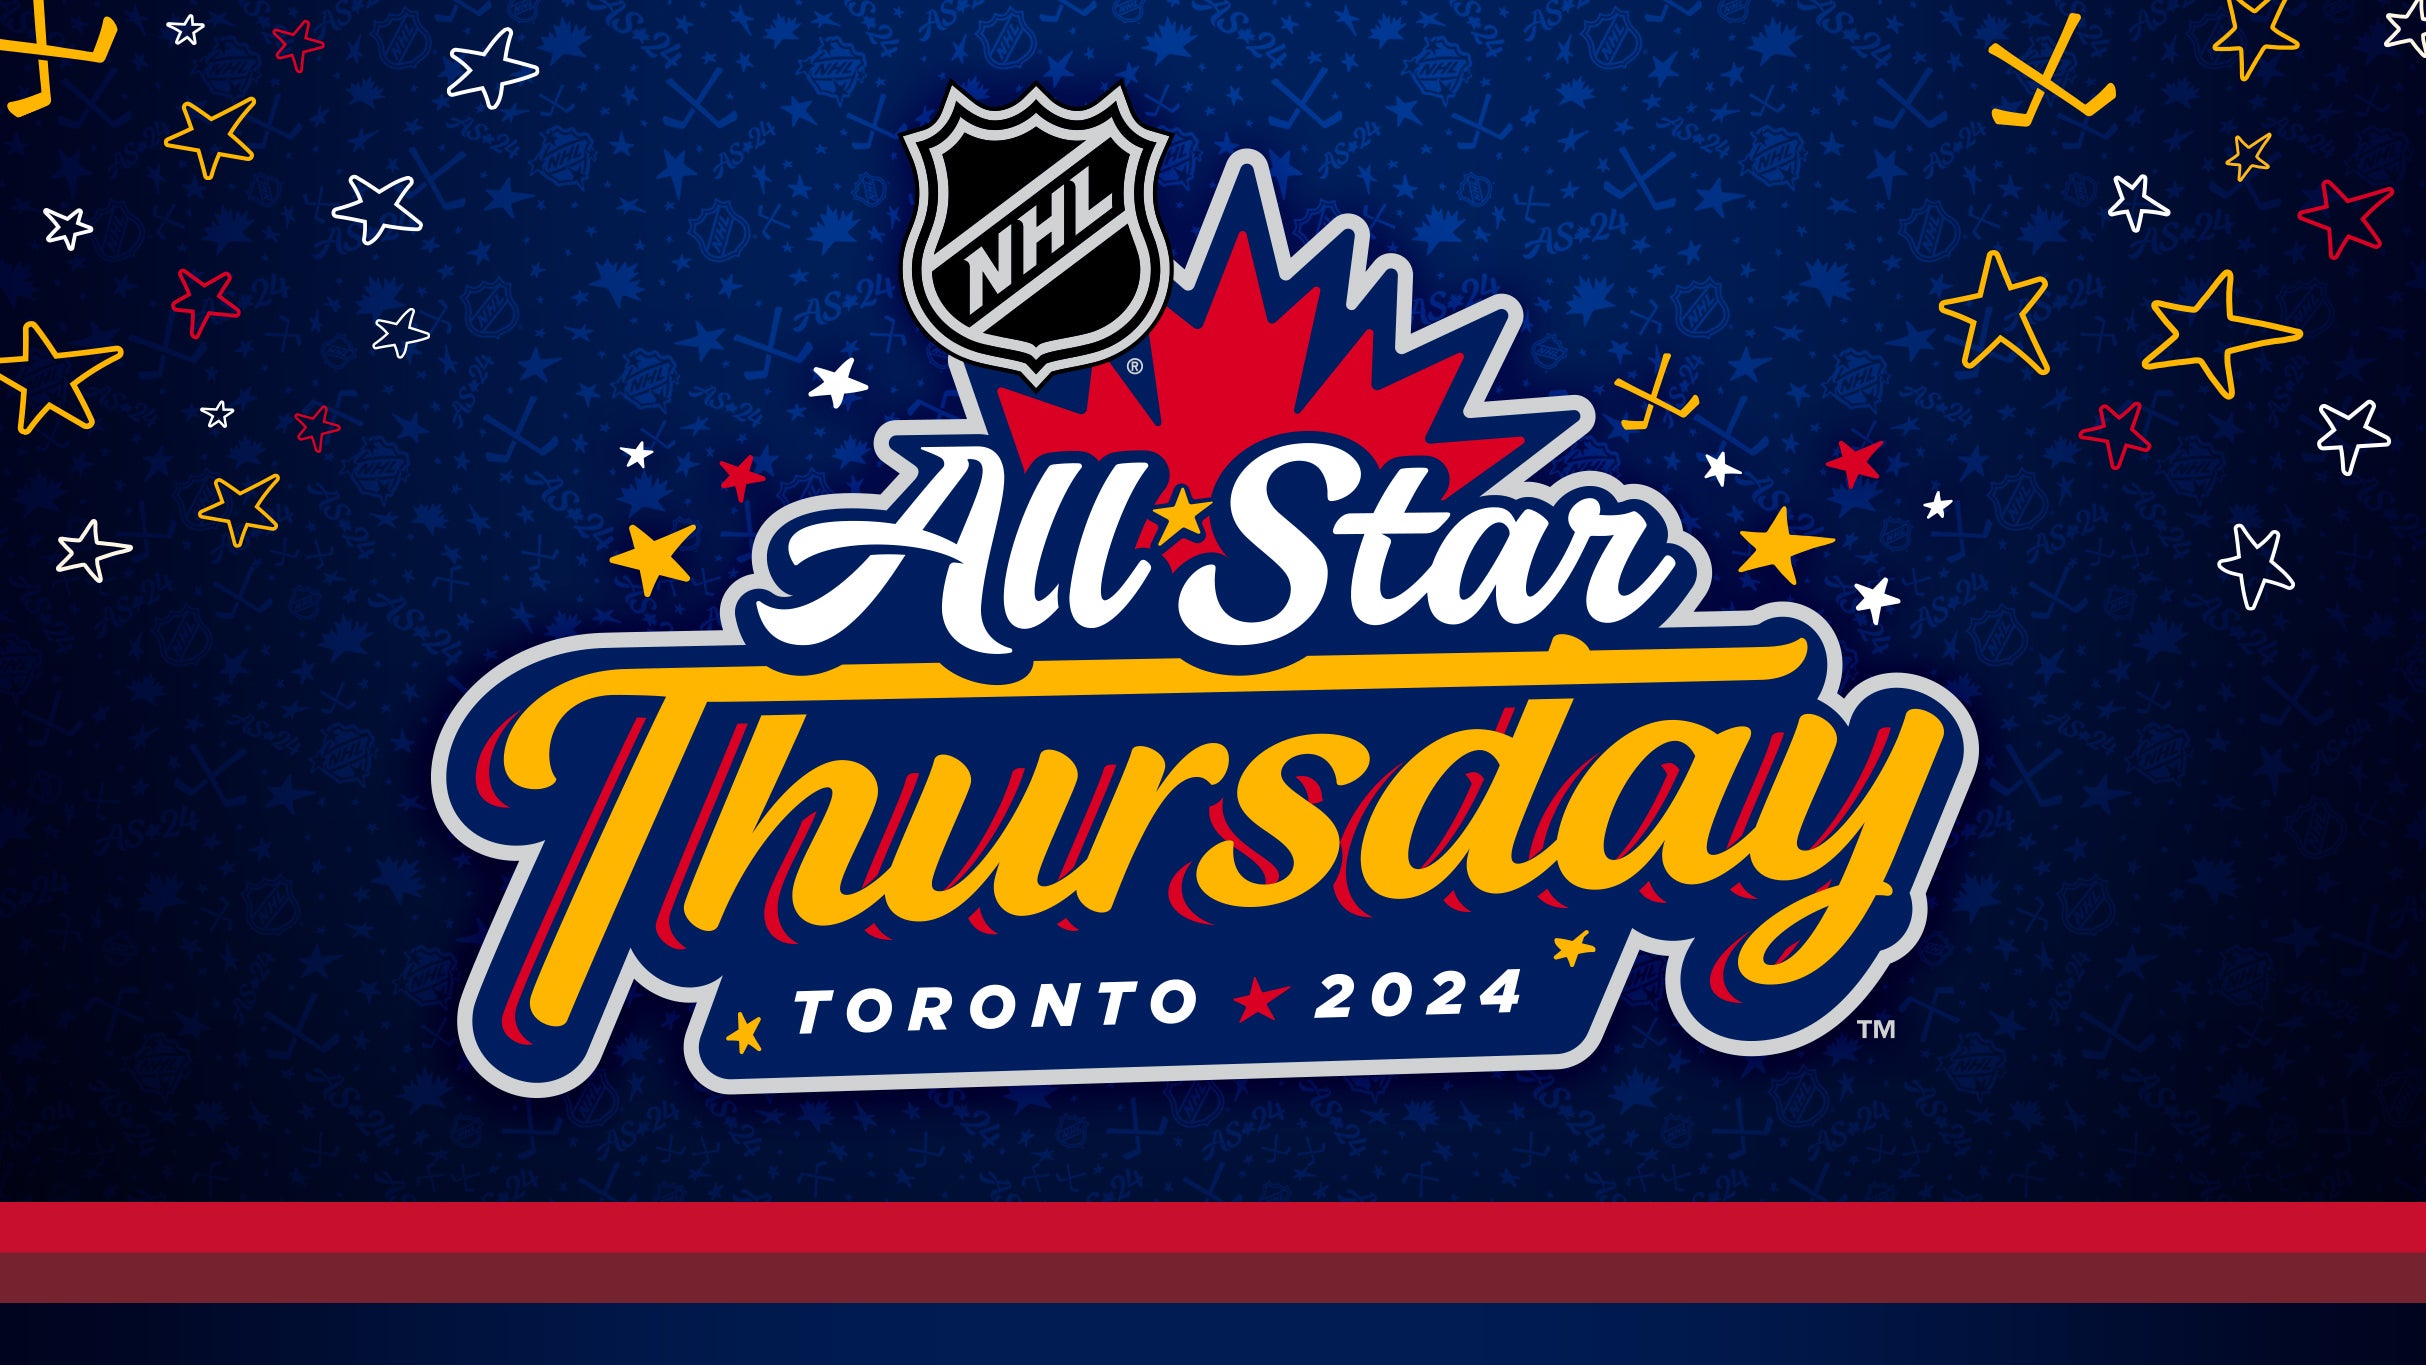 NHL All-Star Thursday in Toronto promo photo for NHL Presale presale offer code